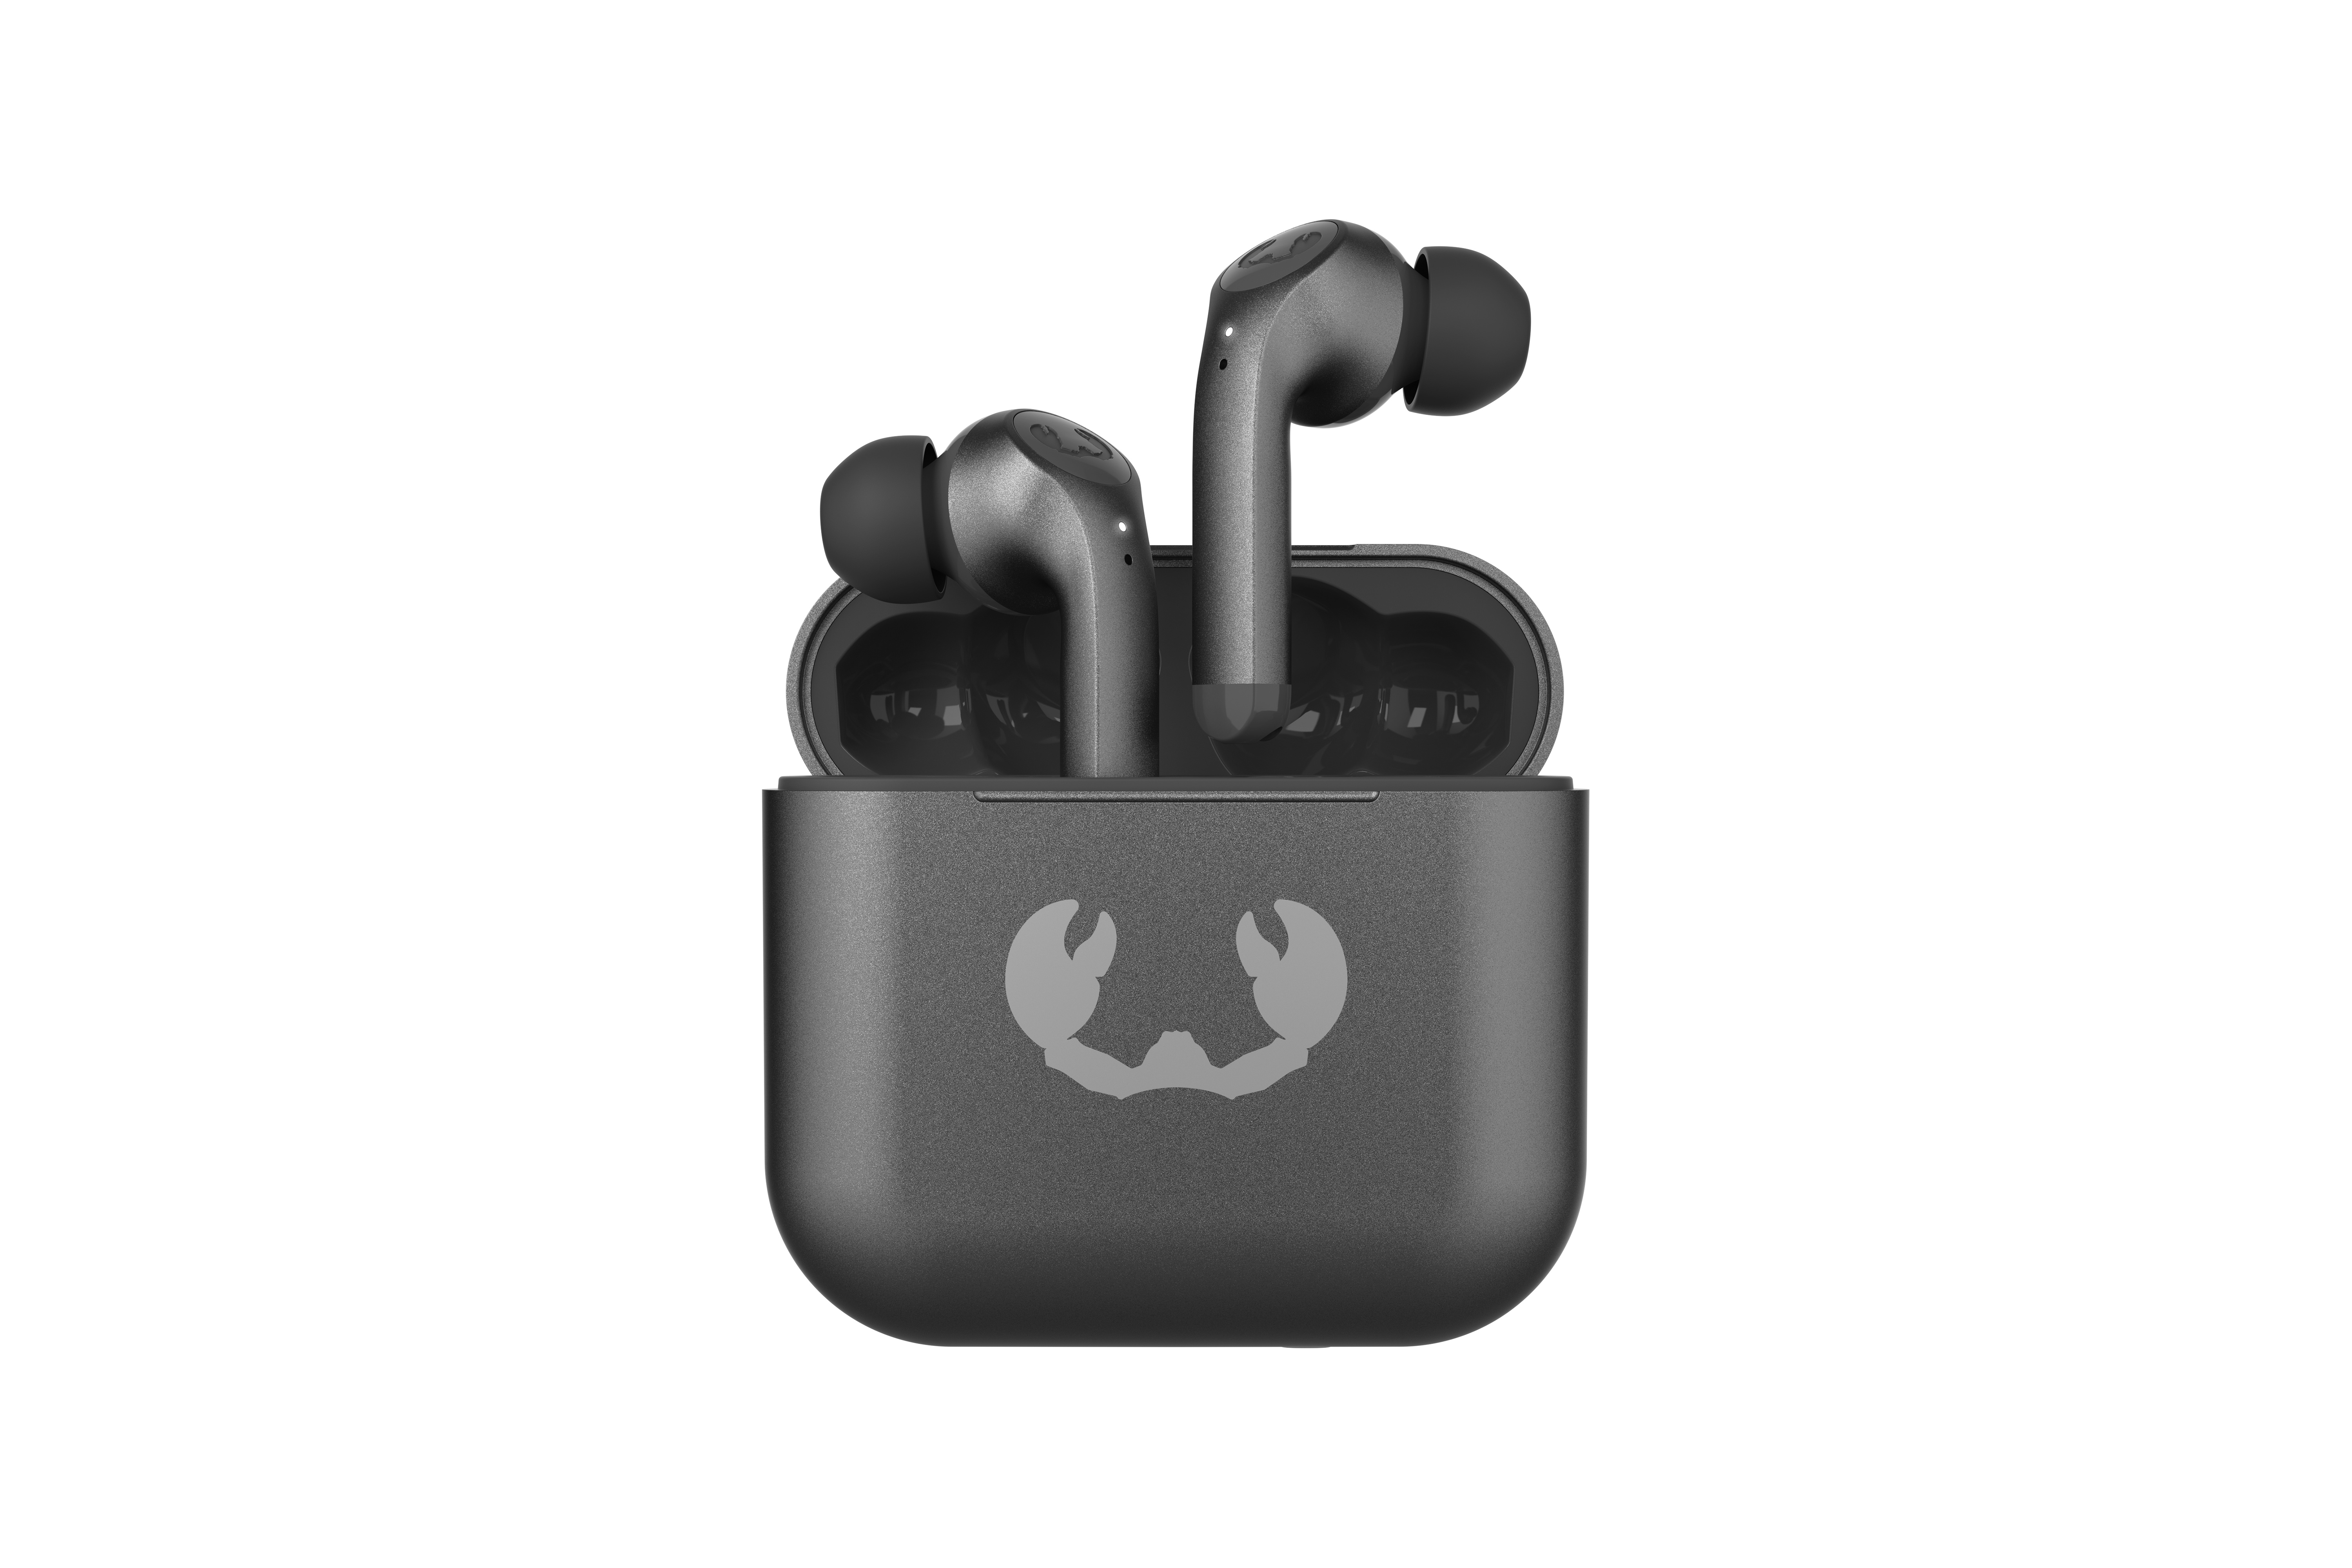 In-ear Storm Twins Grey, Grey REBEL Tip 3+ Storm Wireless FRESH Kopfhörer \'N True Bluetooth